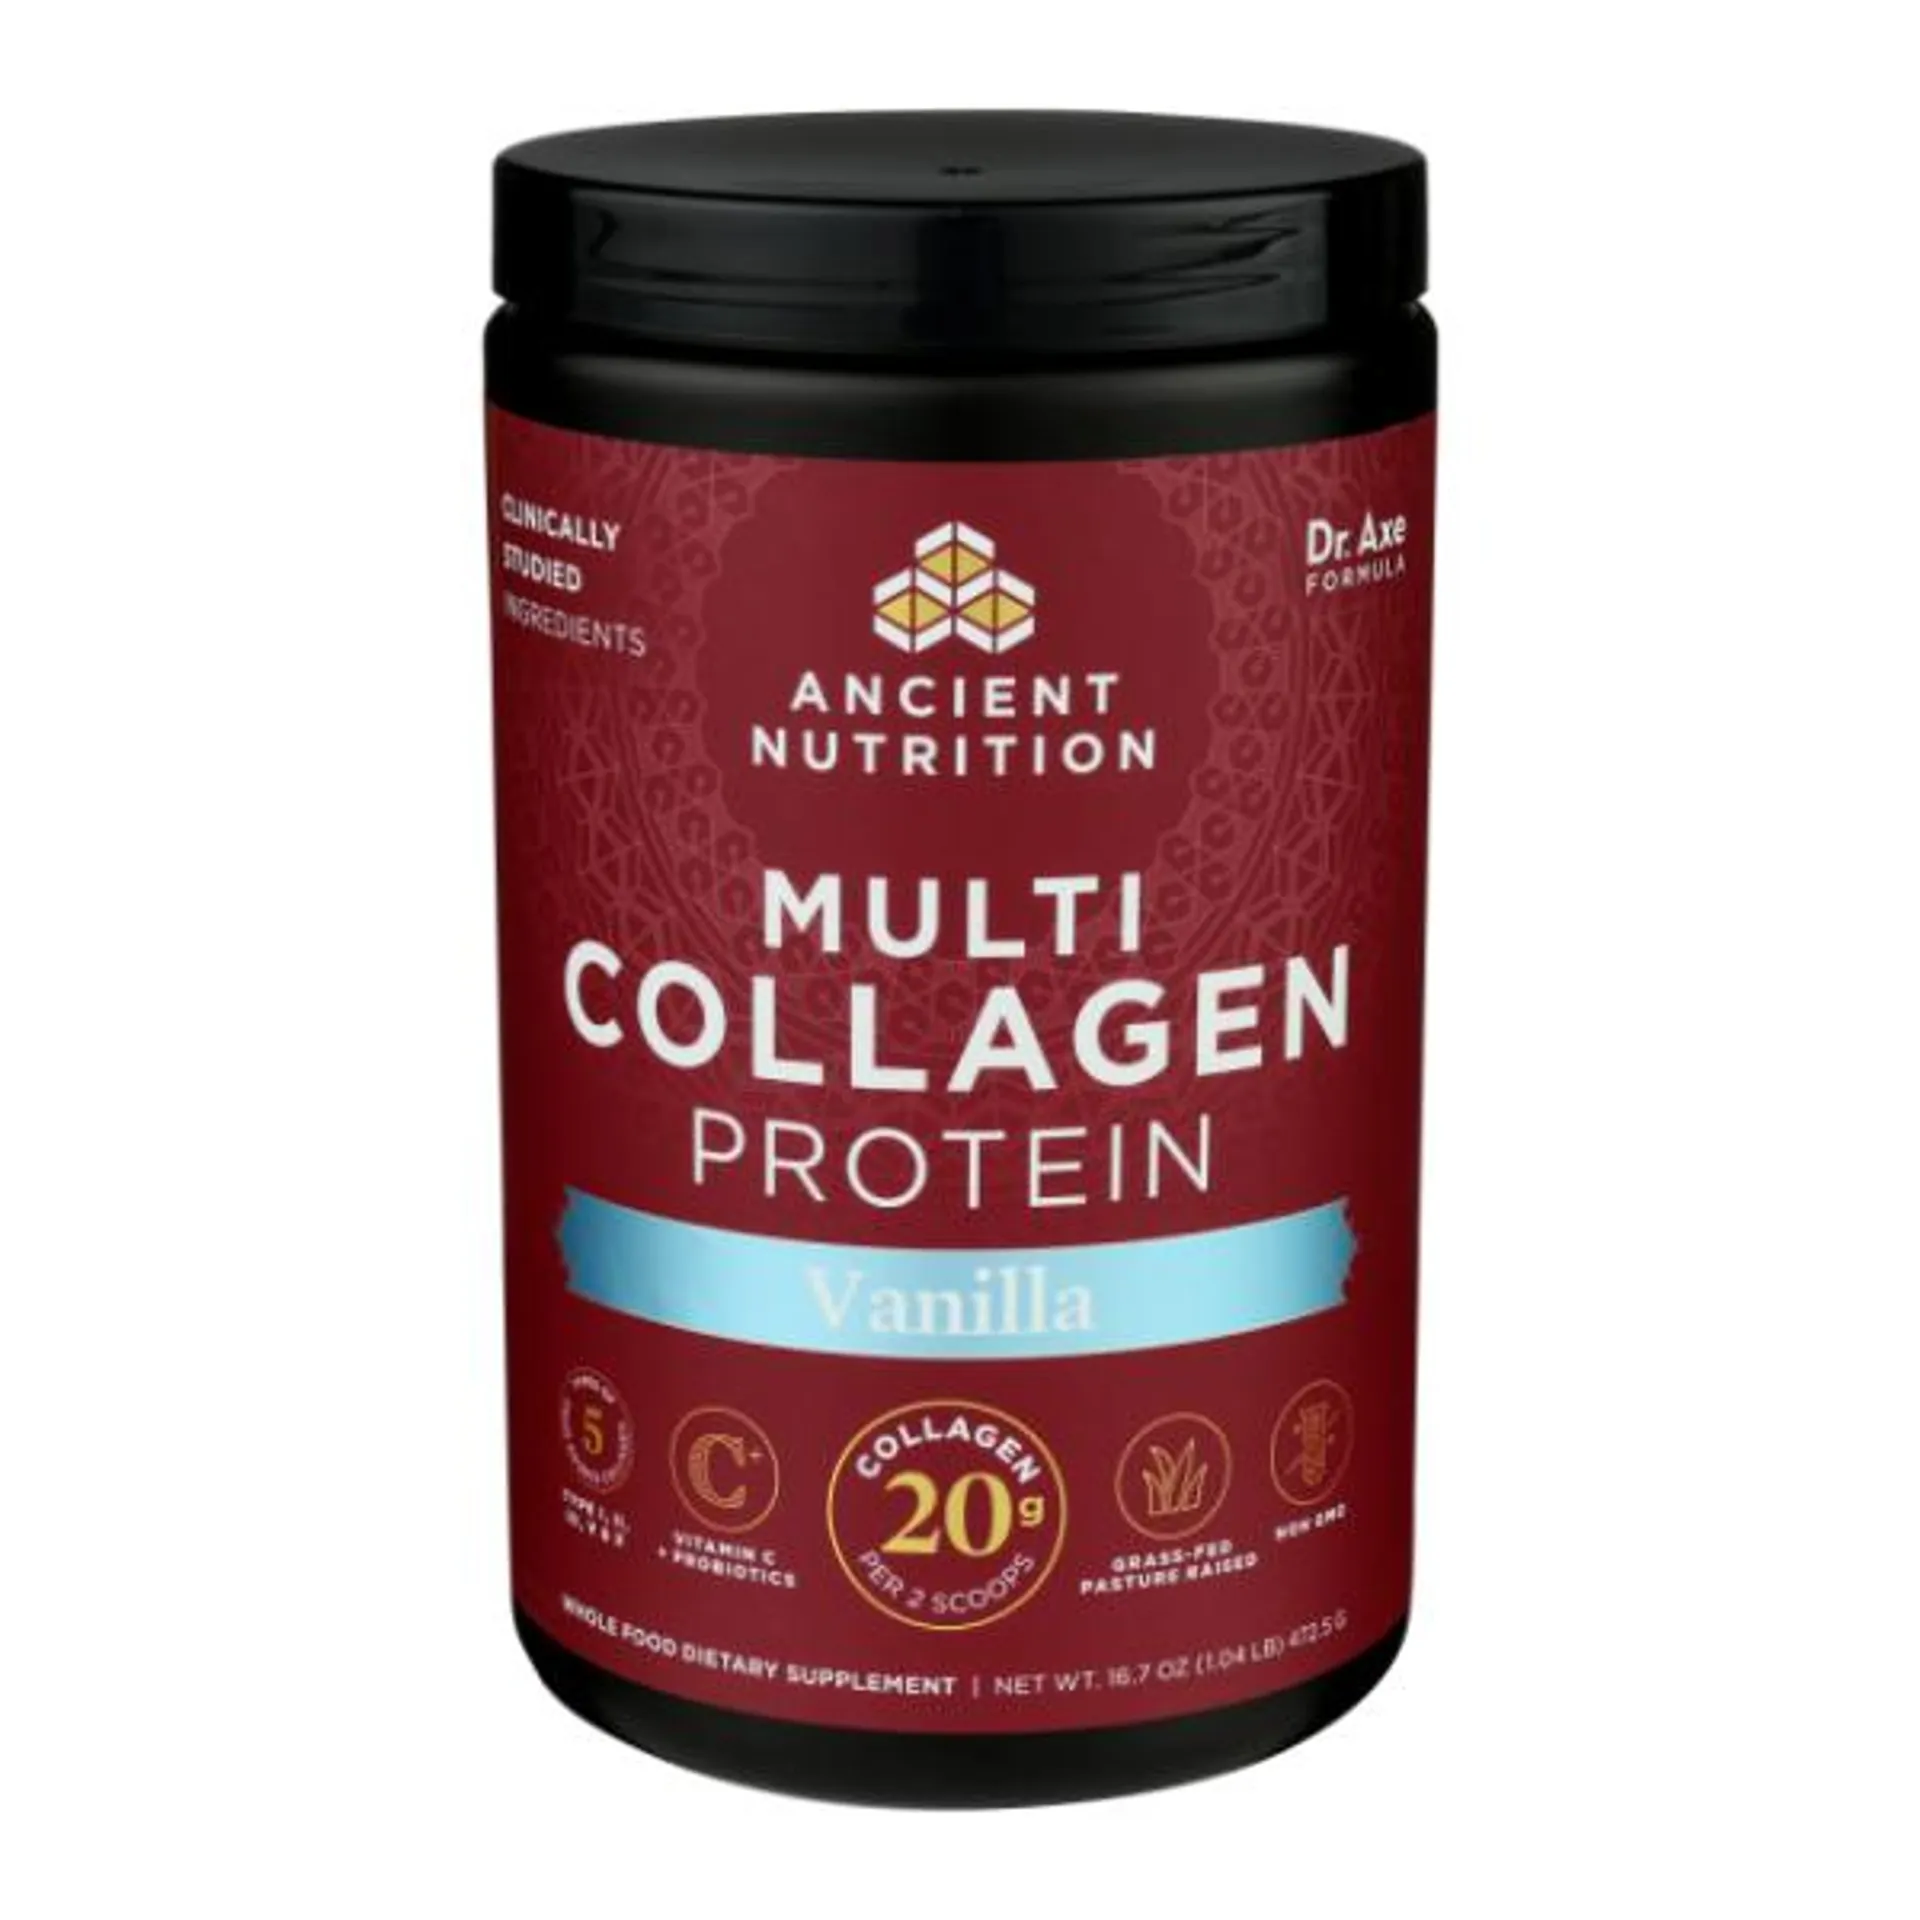 Ancient Nutrition Multi Collagen Protein Vanilla Flavor - 16.8 Ounce